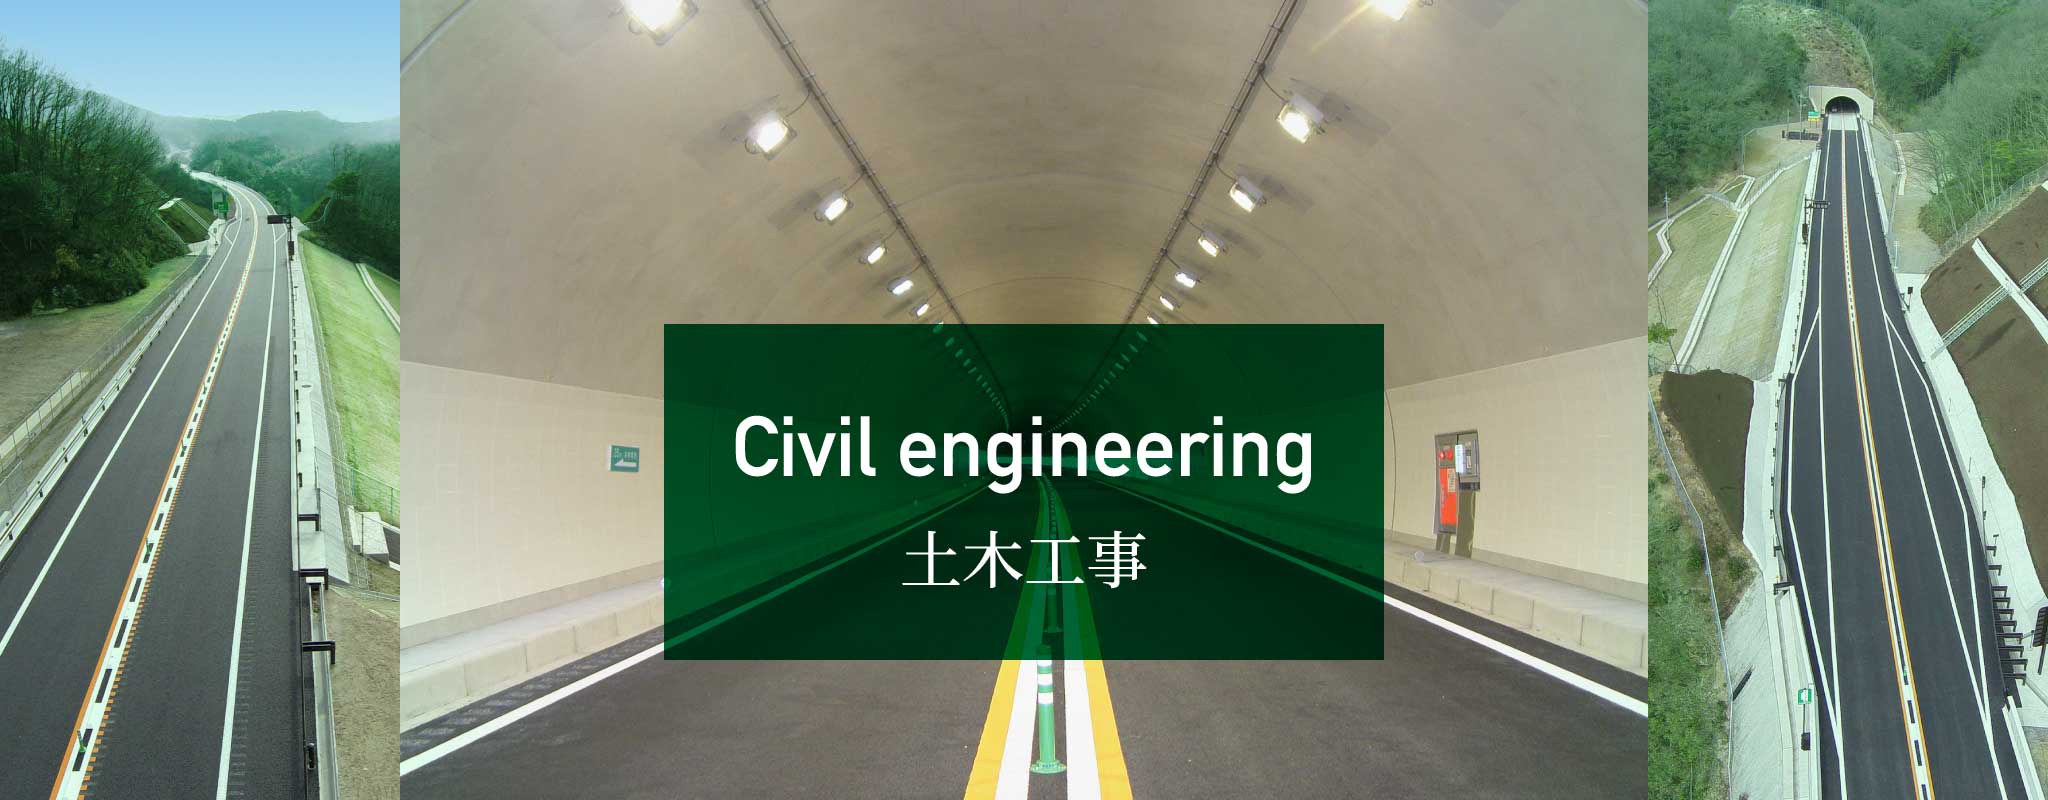 Civil engineering 土木工事